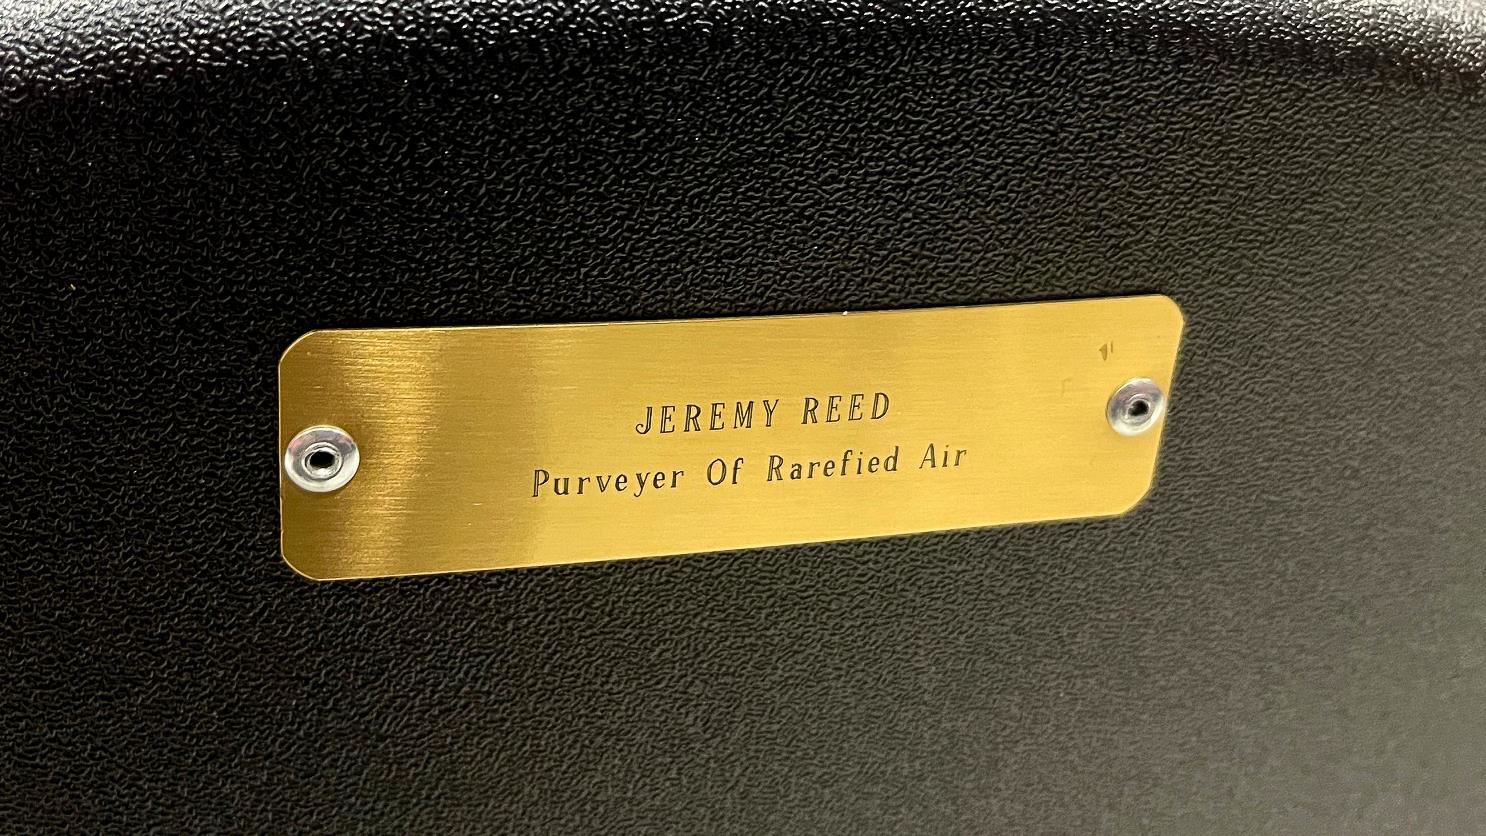 Jeremy Reed dedication plaque